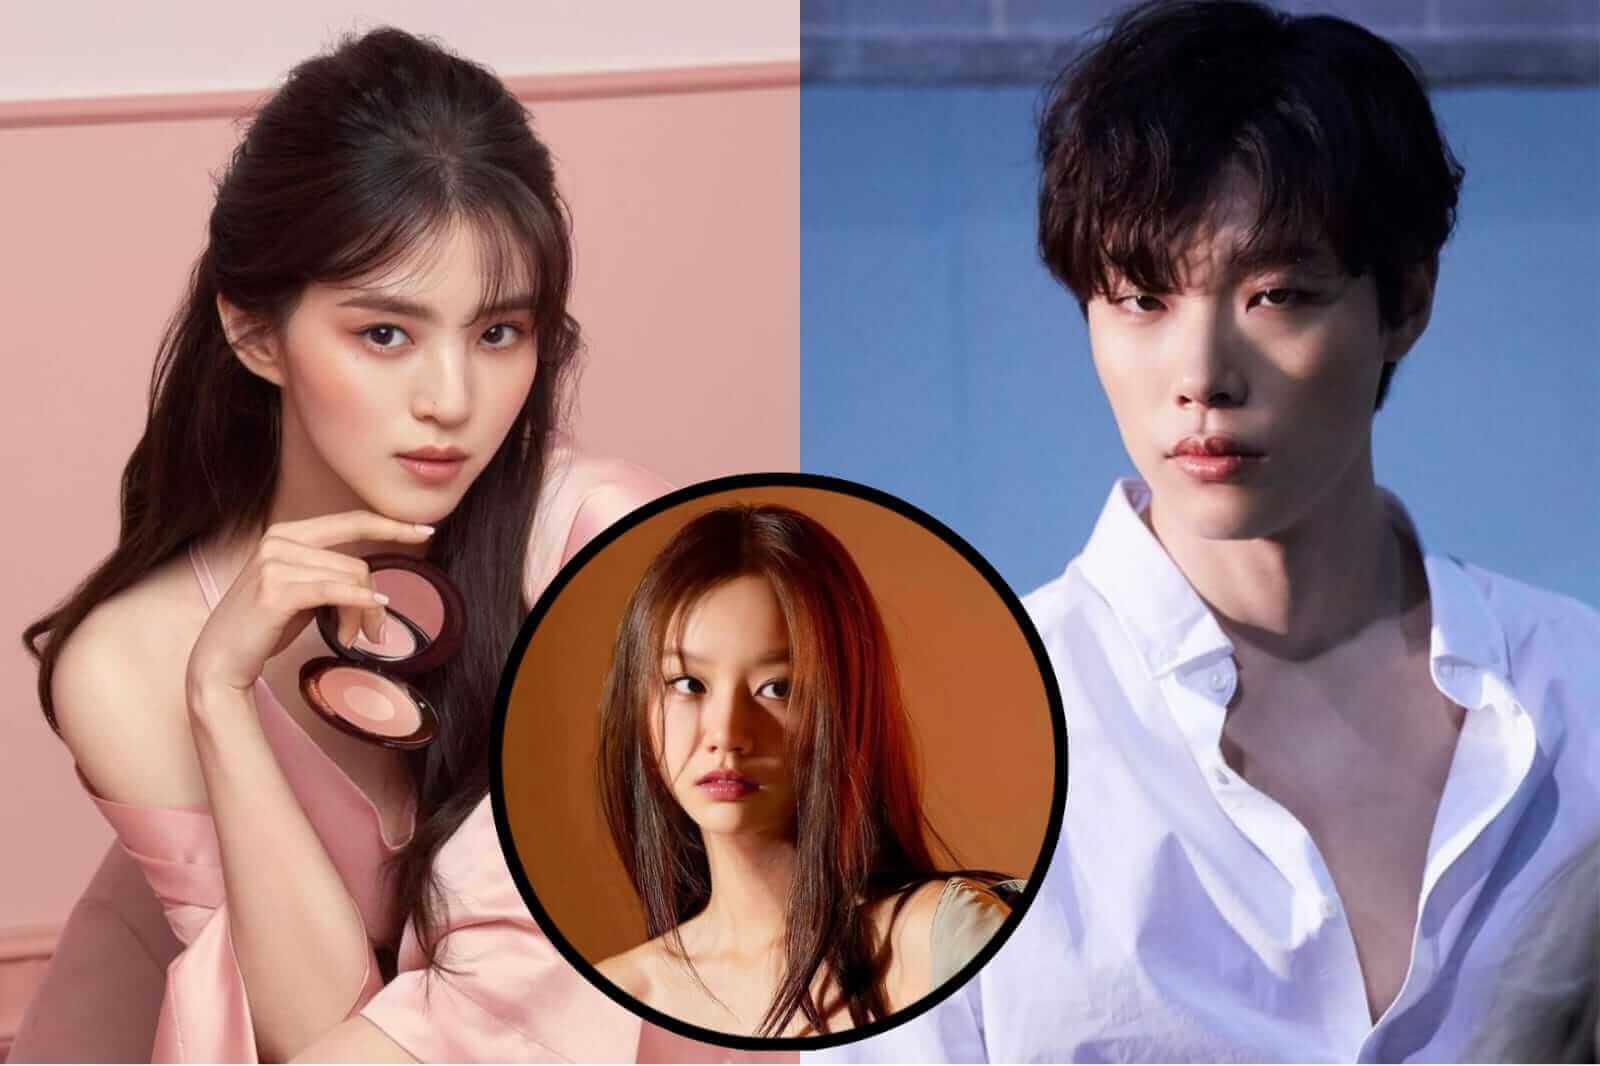 MBC News' Astonishing Unveiling of Ryu Jun Yeol and Han So Hee Alleged Love Affair